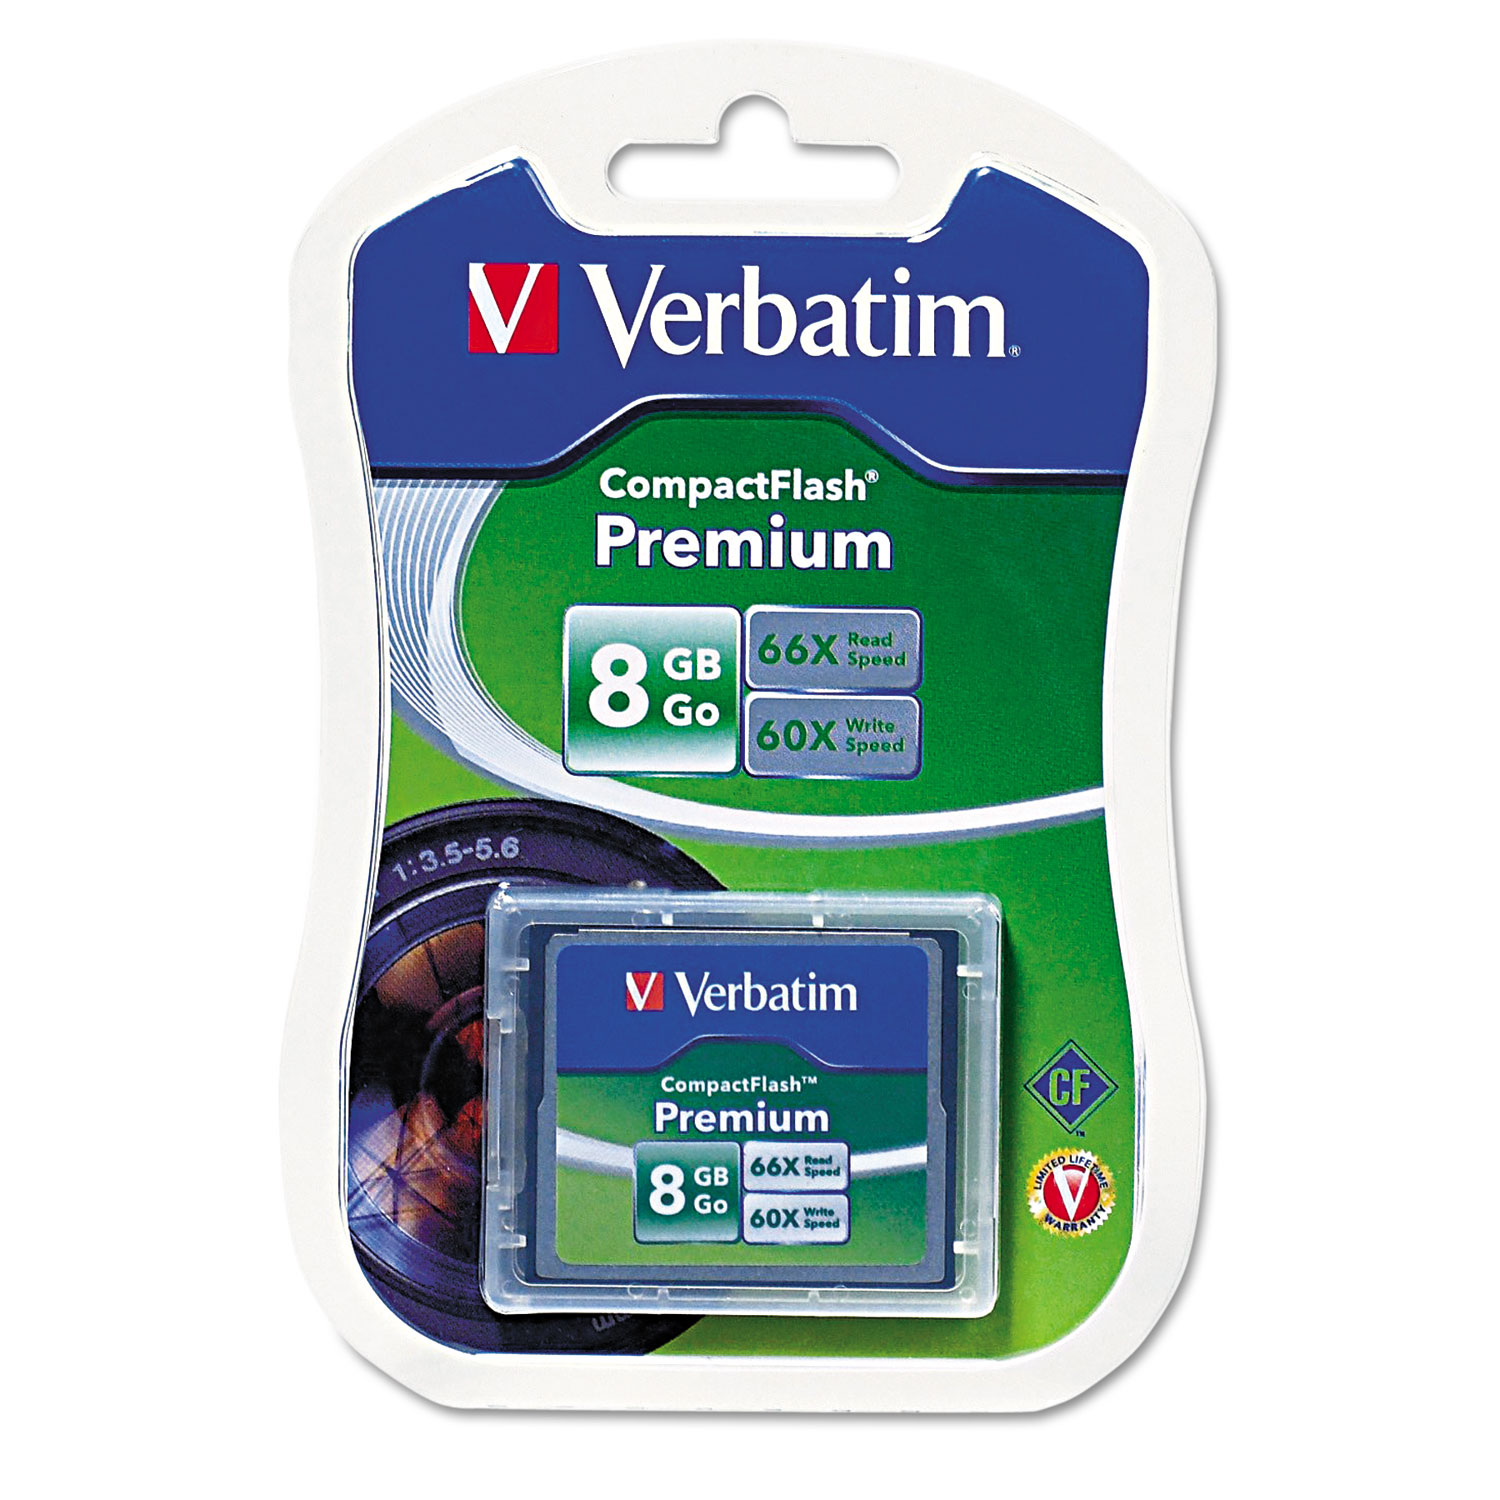 Premium CompactFlash Memory Card, 8GB, 66X Read Speed/60X Write Speed